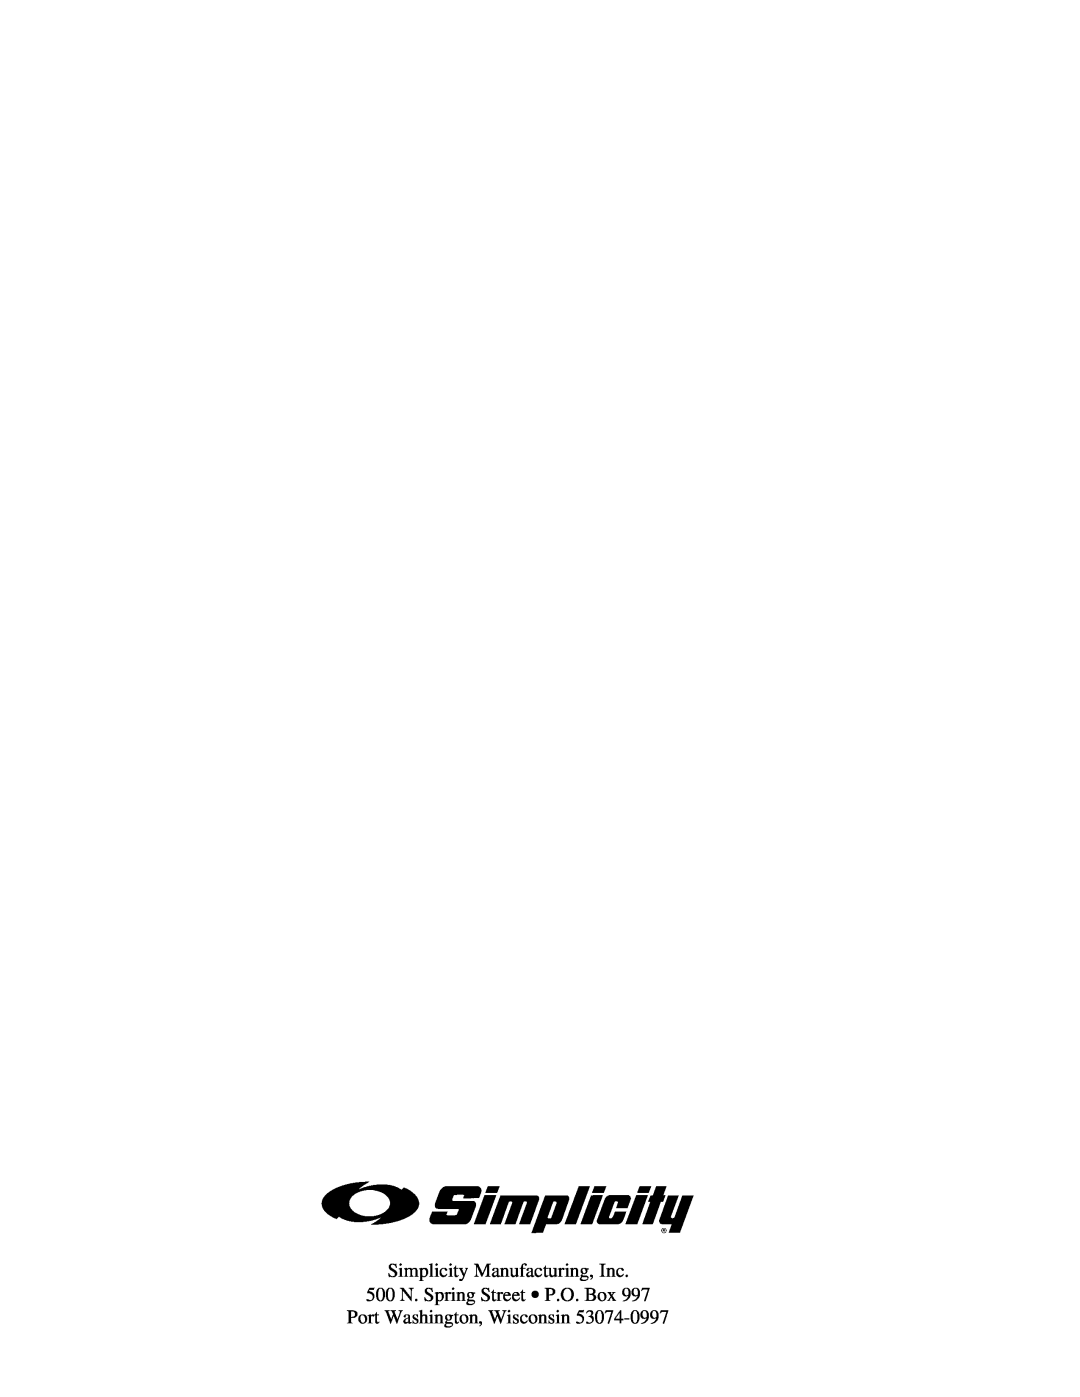 Simplicity 1693704, 1693705 manual Simplicity Manufacturing, Inc 500 N. Spring Street ∙ P.O. Box, Port Washington, Wisconsin 